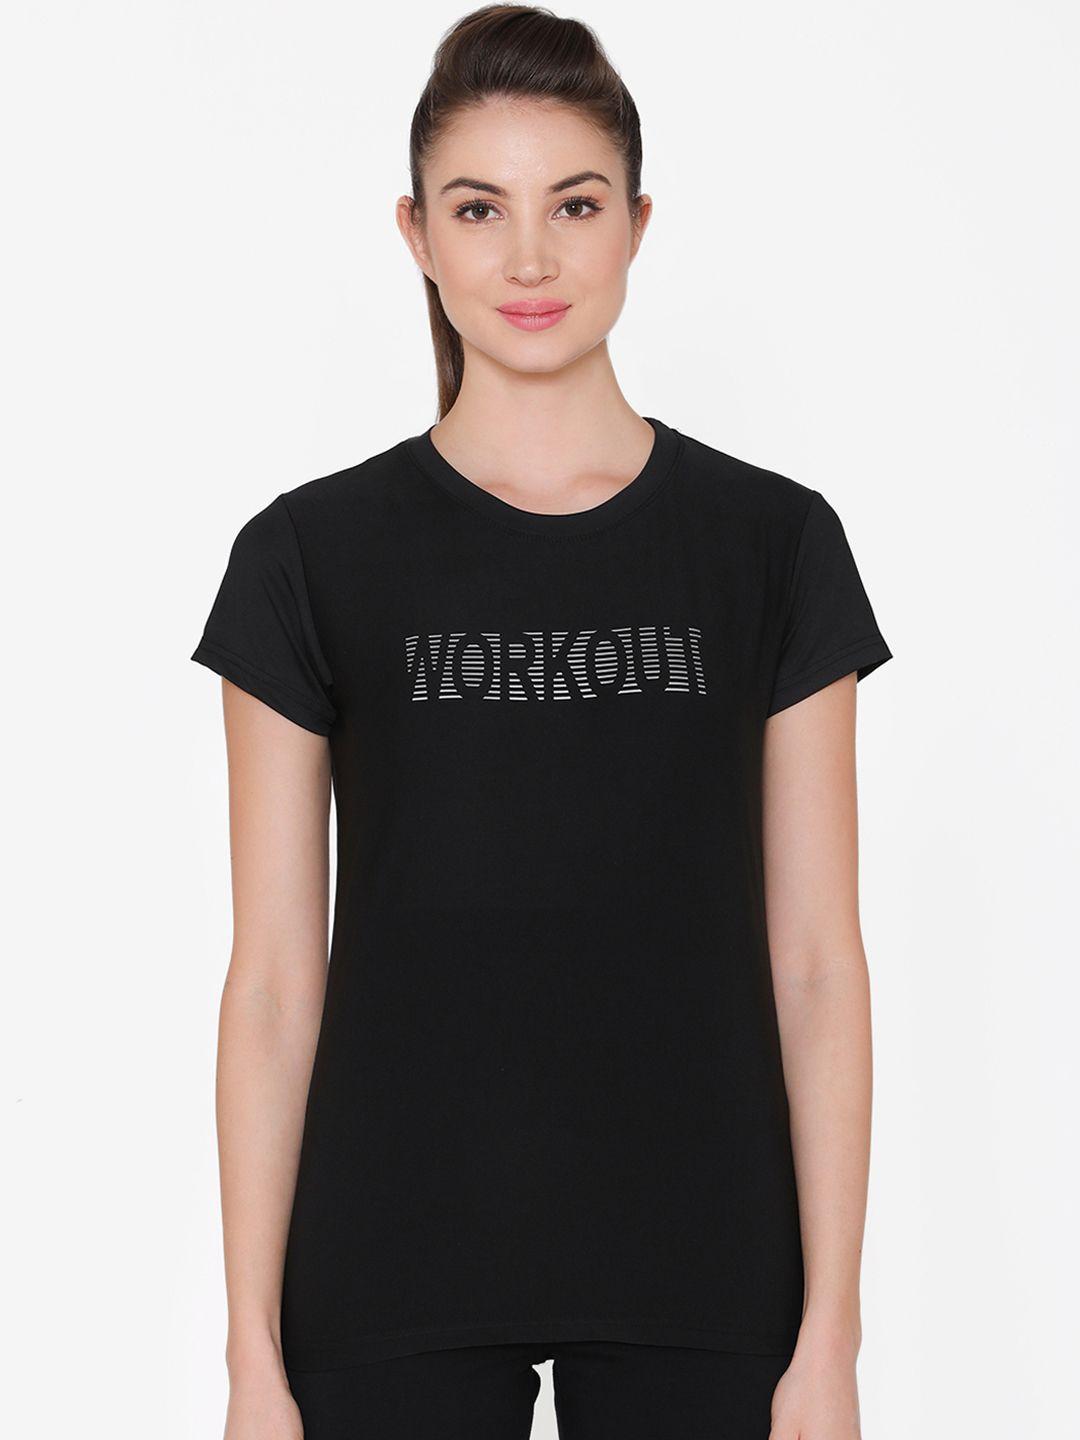 clovia-women-black-printed-round-neck-t-shirt